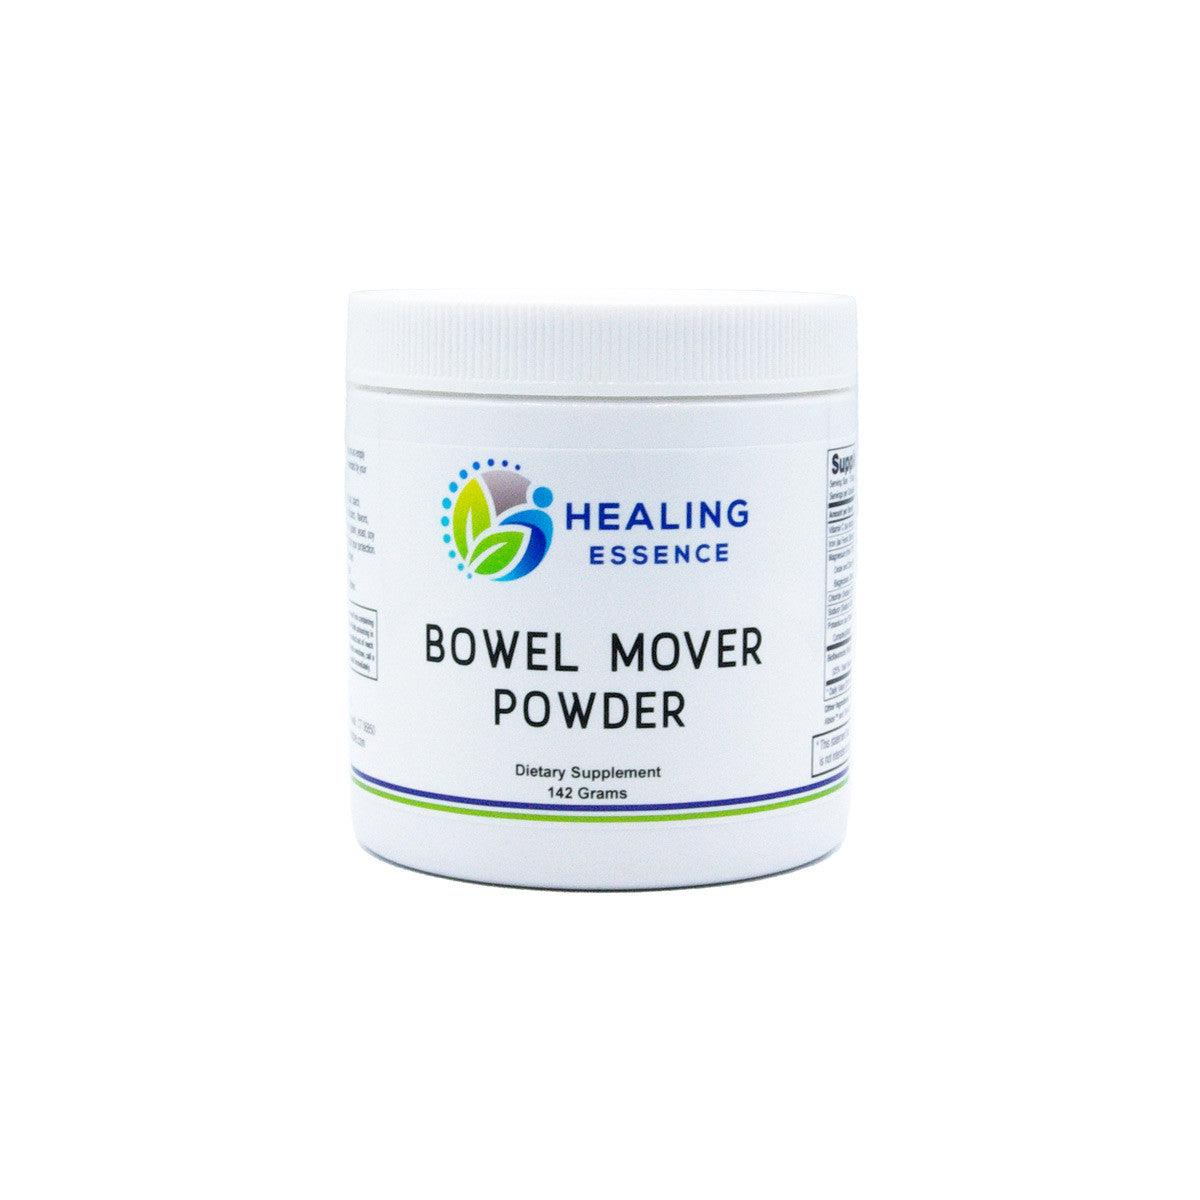 Bowel Mover Powder